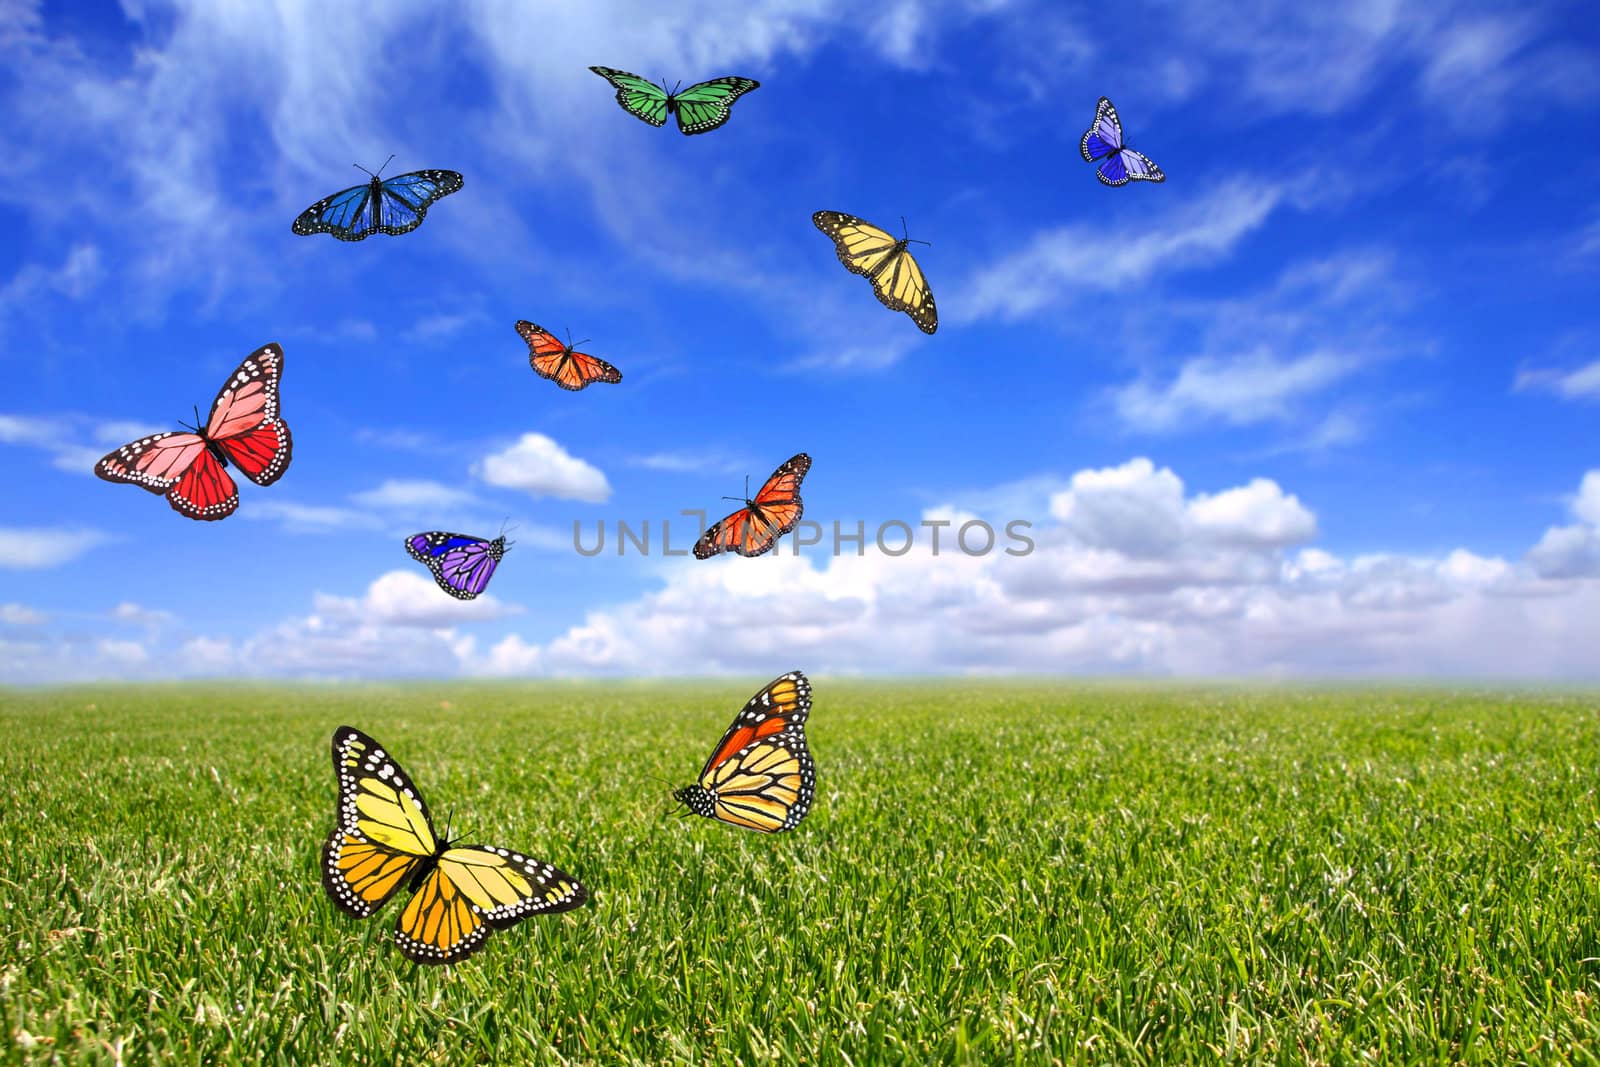 Beautiful Butterflies Flying Free in an Open Field of Grass and Sky